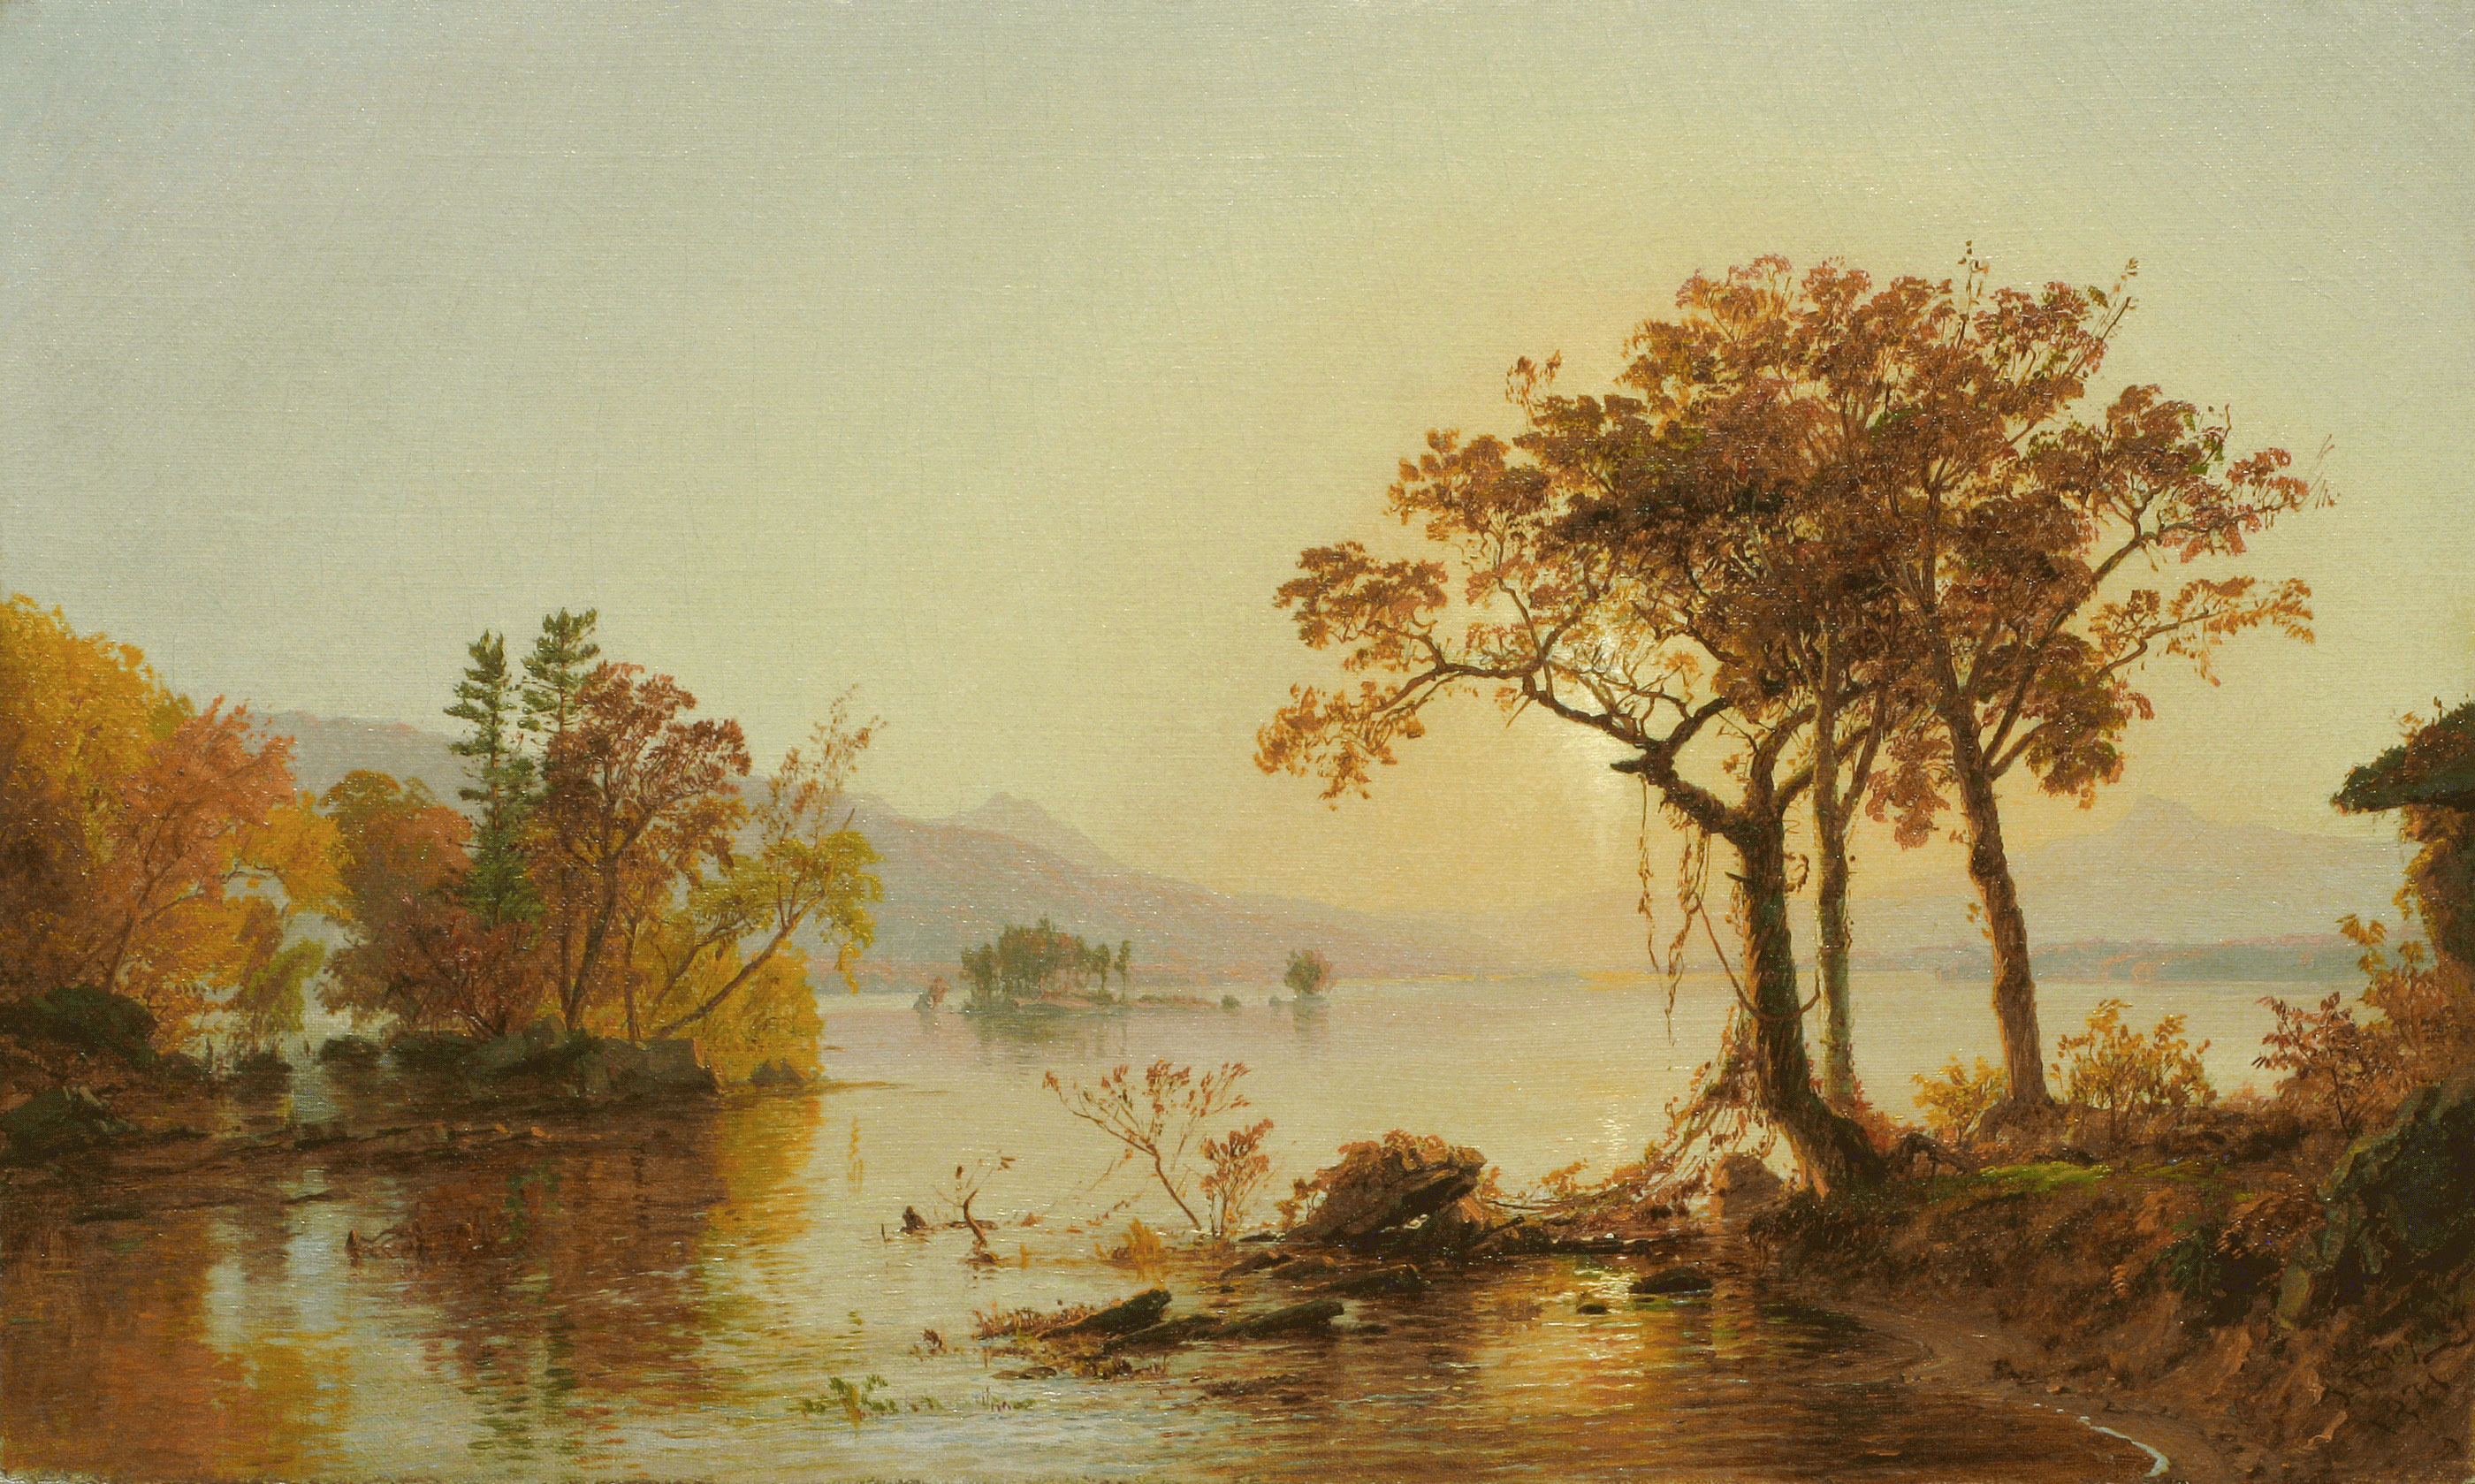 Greenwood Lake, New Jersey by Jasper Francis Cropsey, 1874